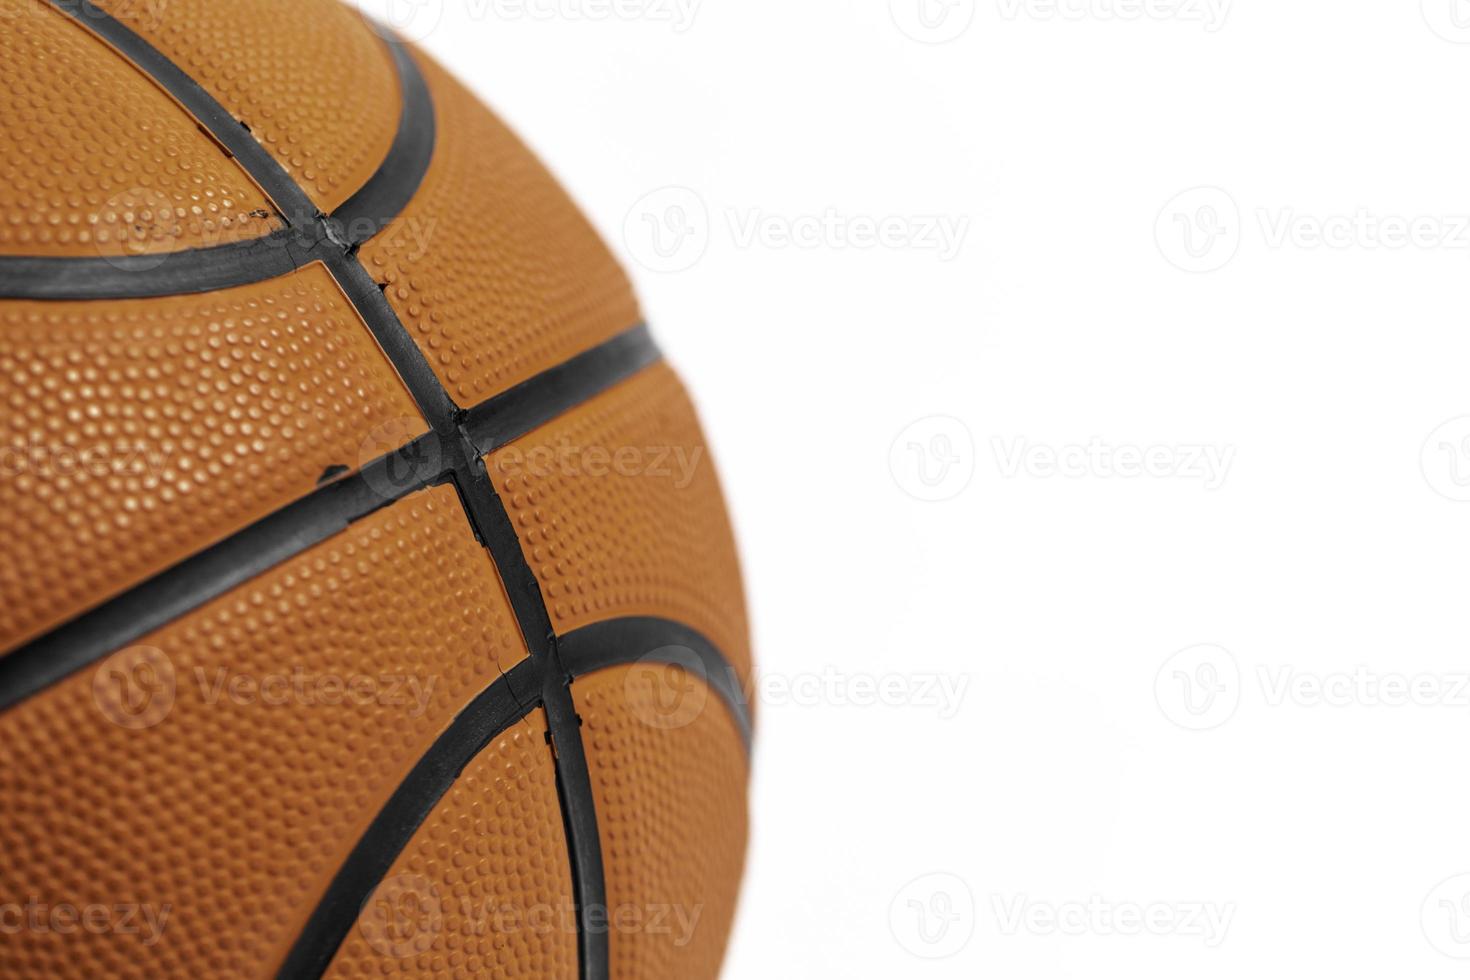 Basketball Close Up photo